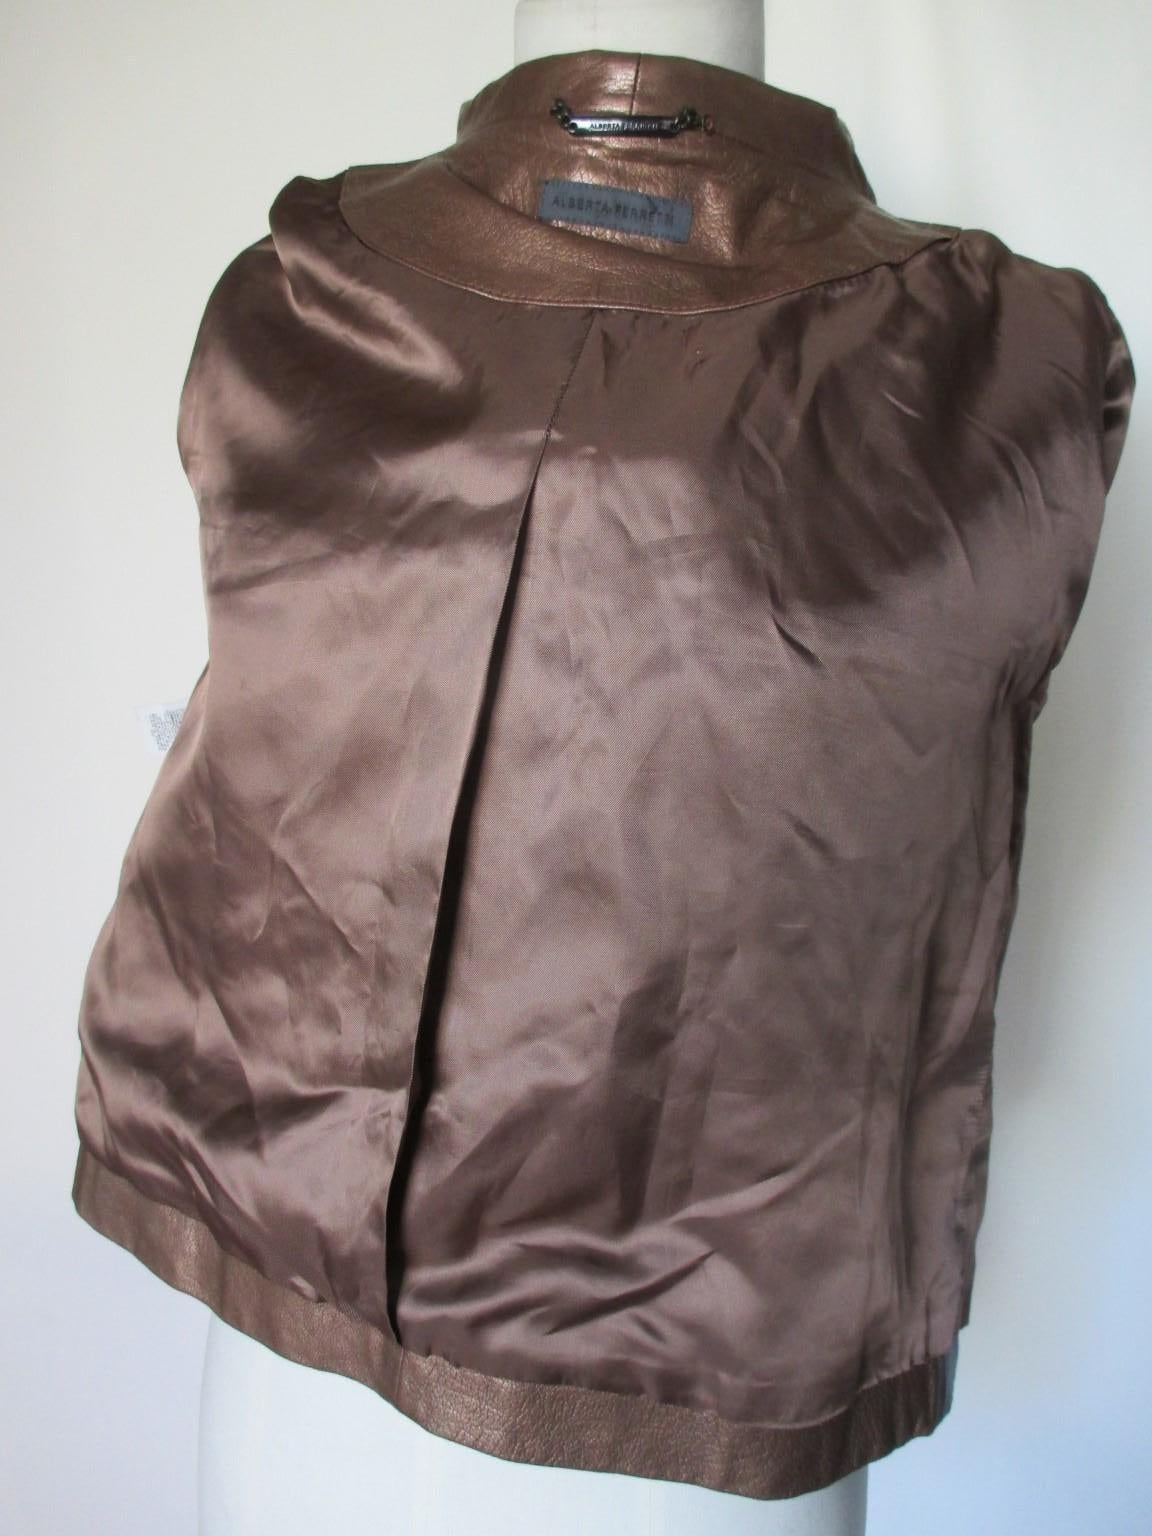 Alberta Ferretti Metallic Fringe Leather Jacket In Good Condition For Sale In Amsterdam, NL